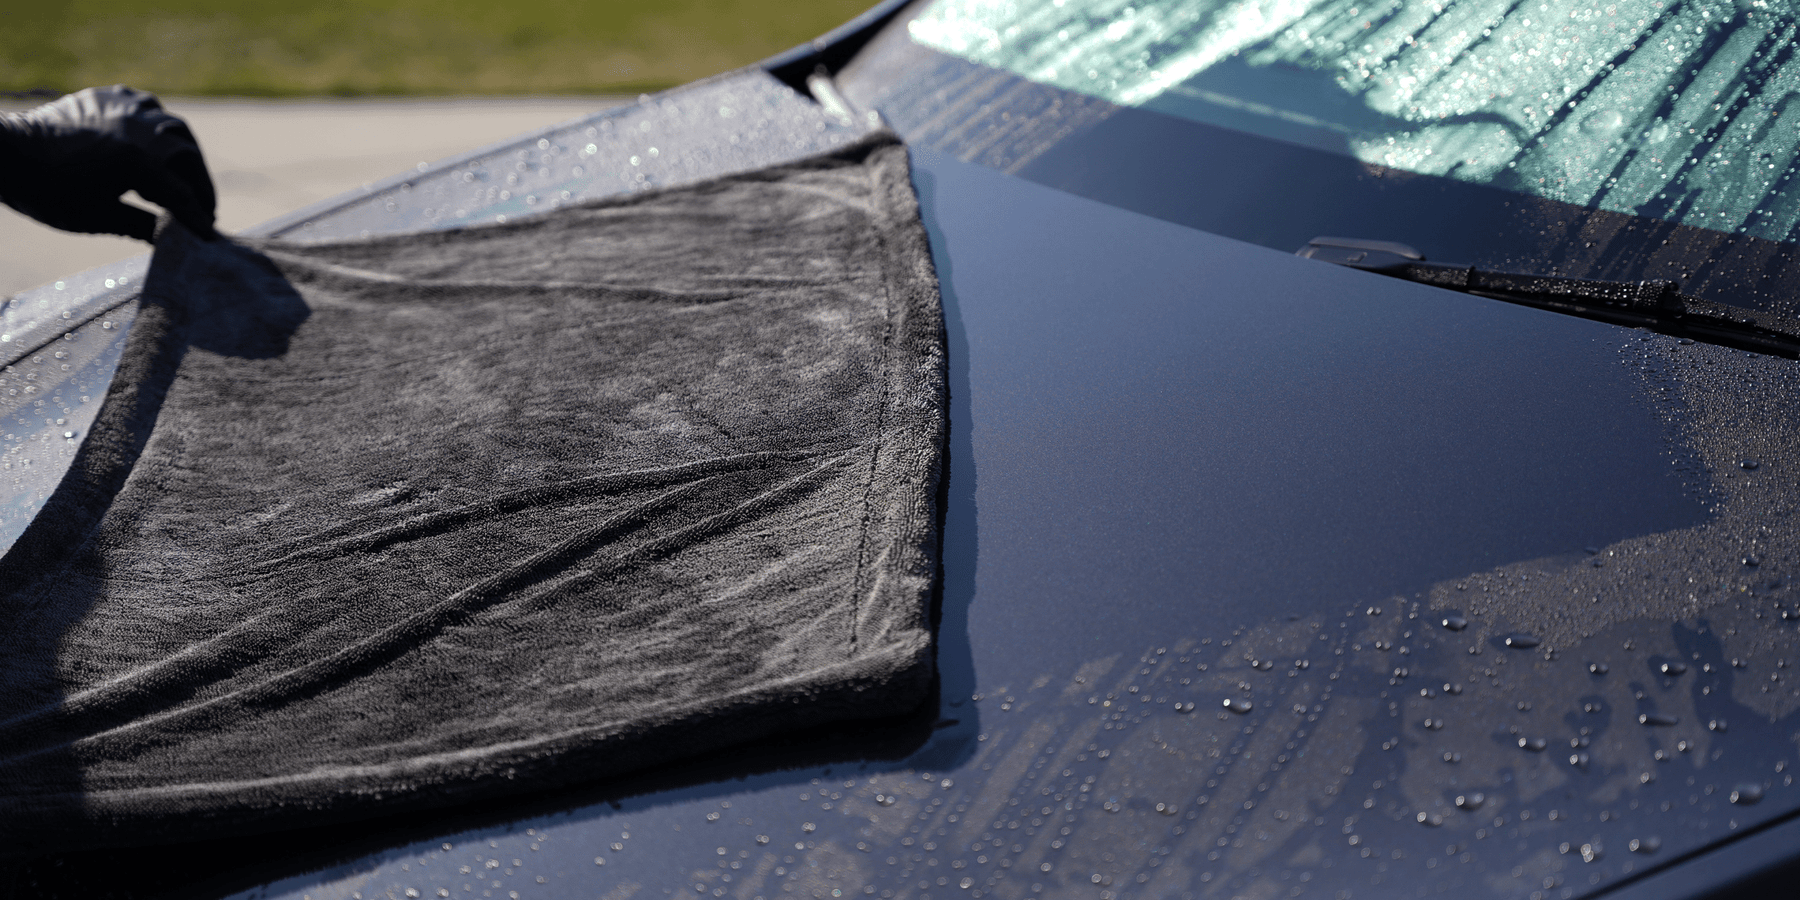 Rip Clean - Exterior & Interior Car Detailing Cleaning Materials